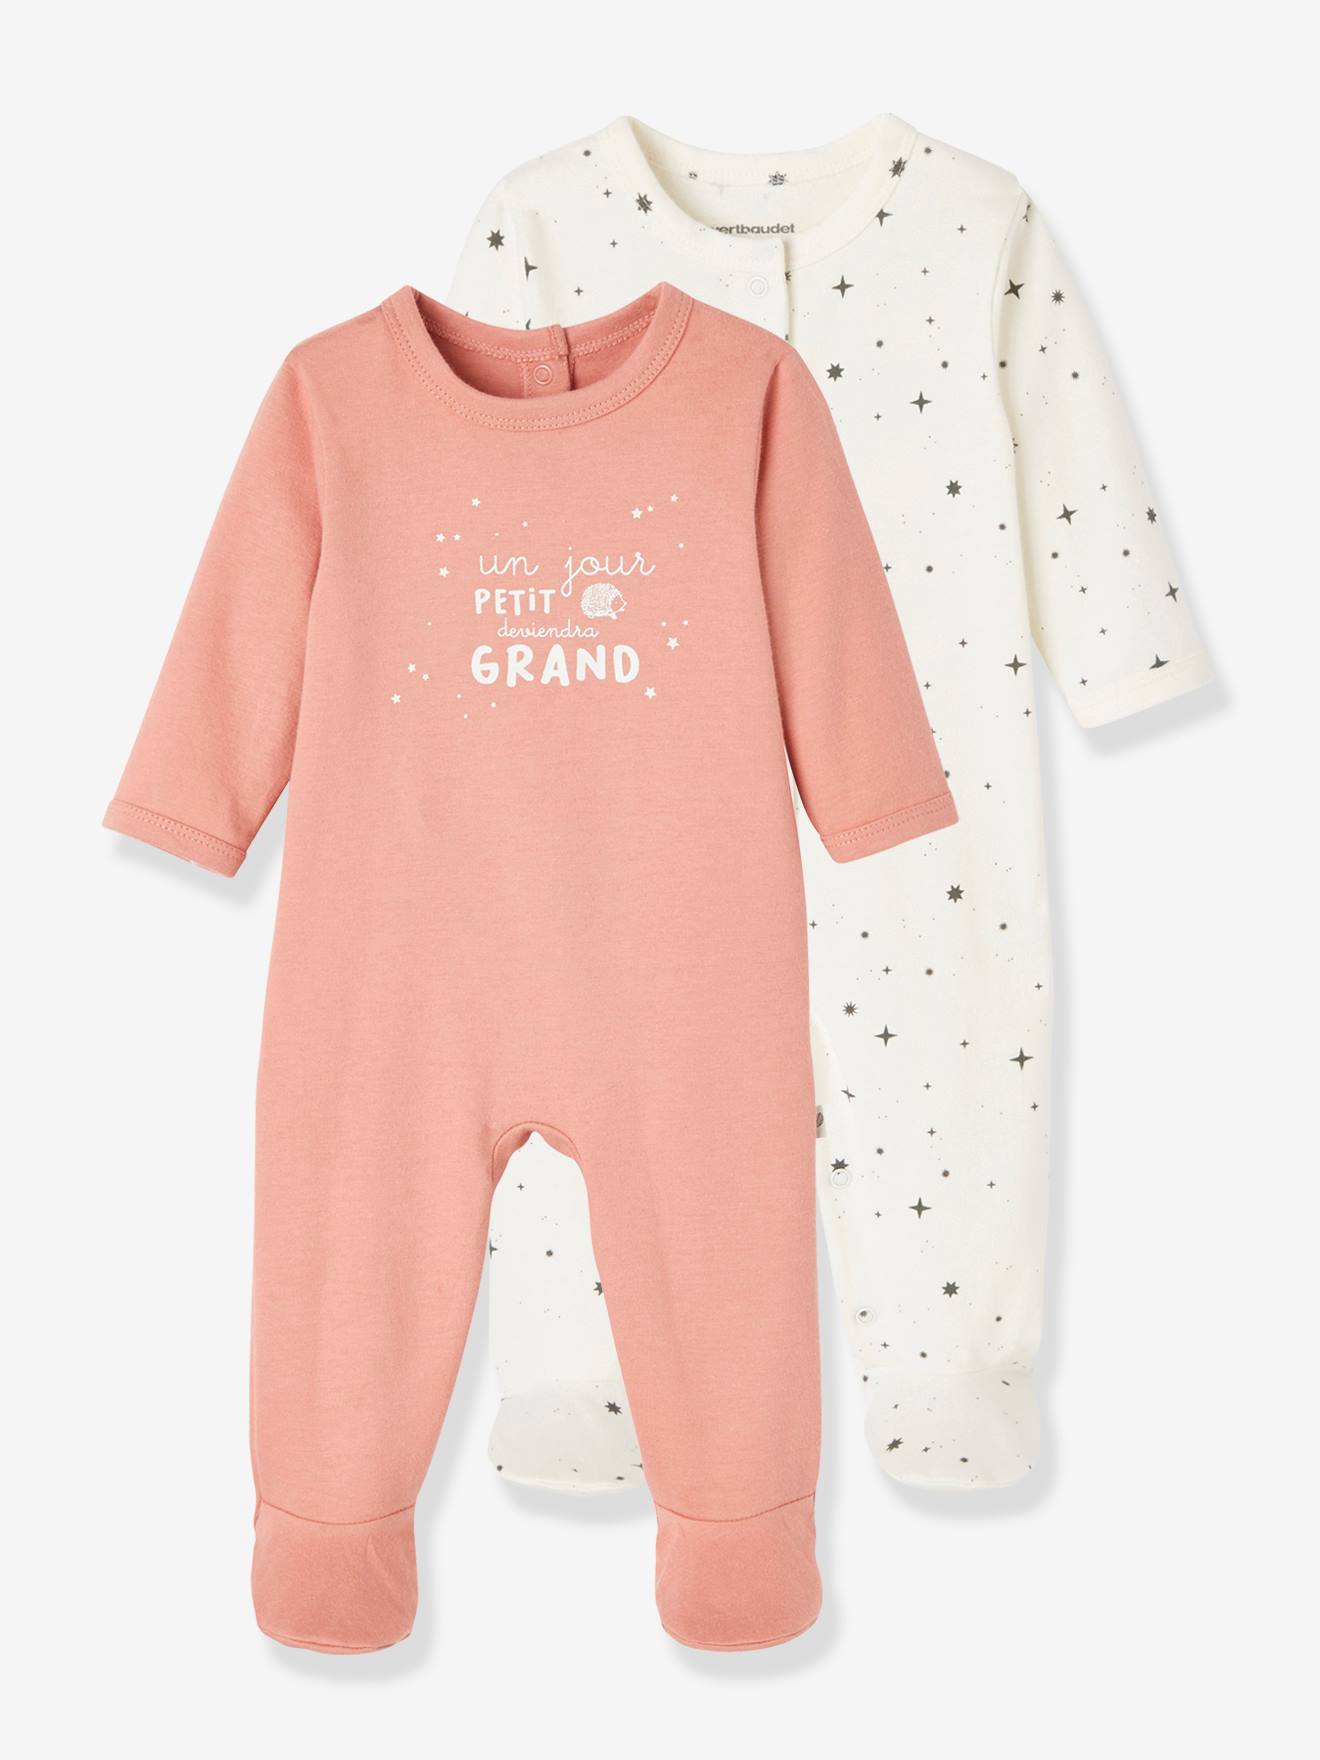 de pijamas de algodón orgánico, para nacido rosa claro liso con motivos - Vertbaudet